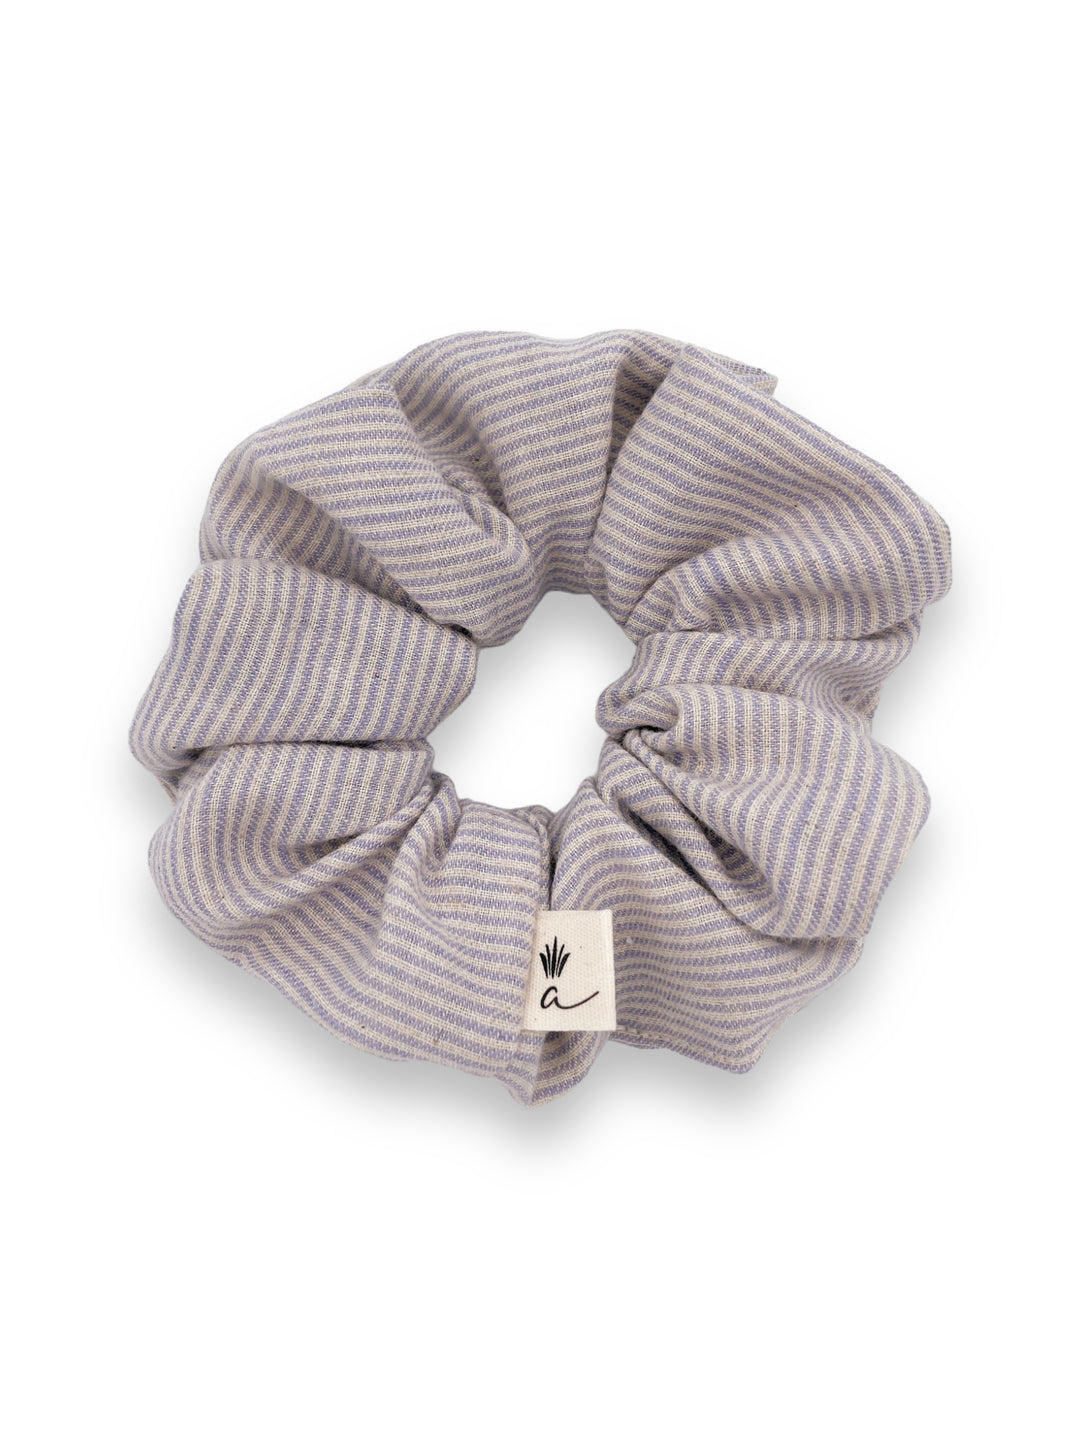 Linen scrunchie - Striped lavender